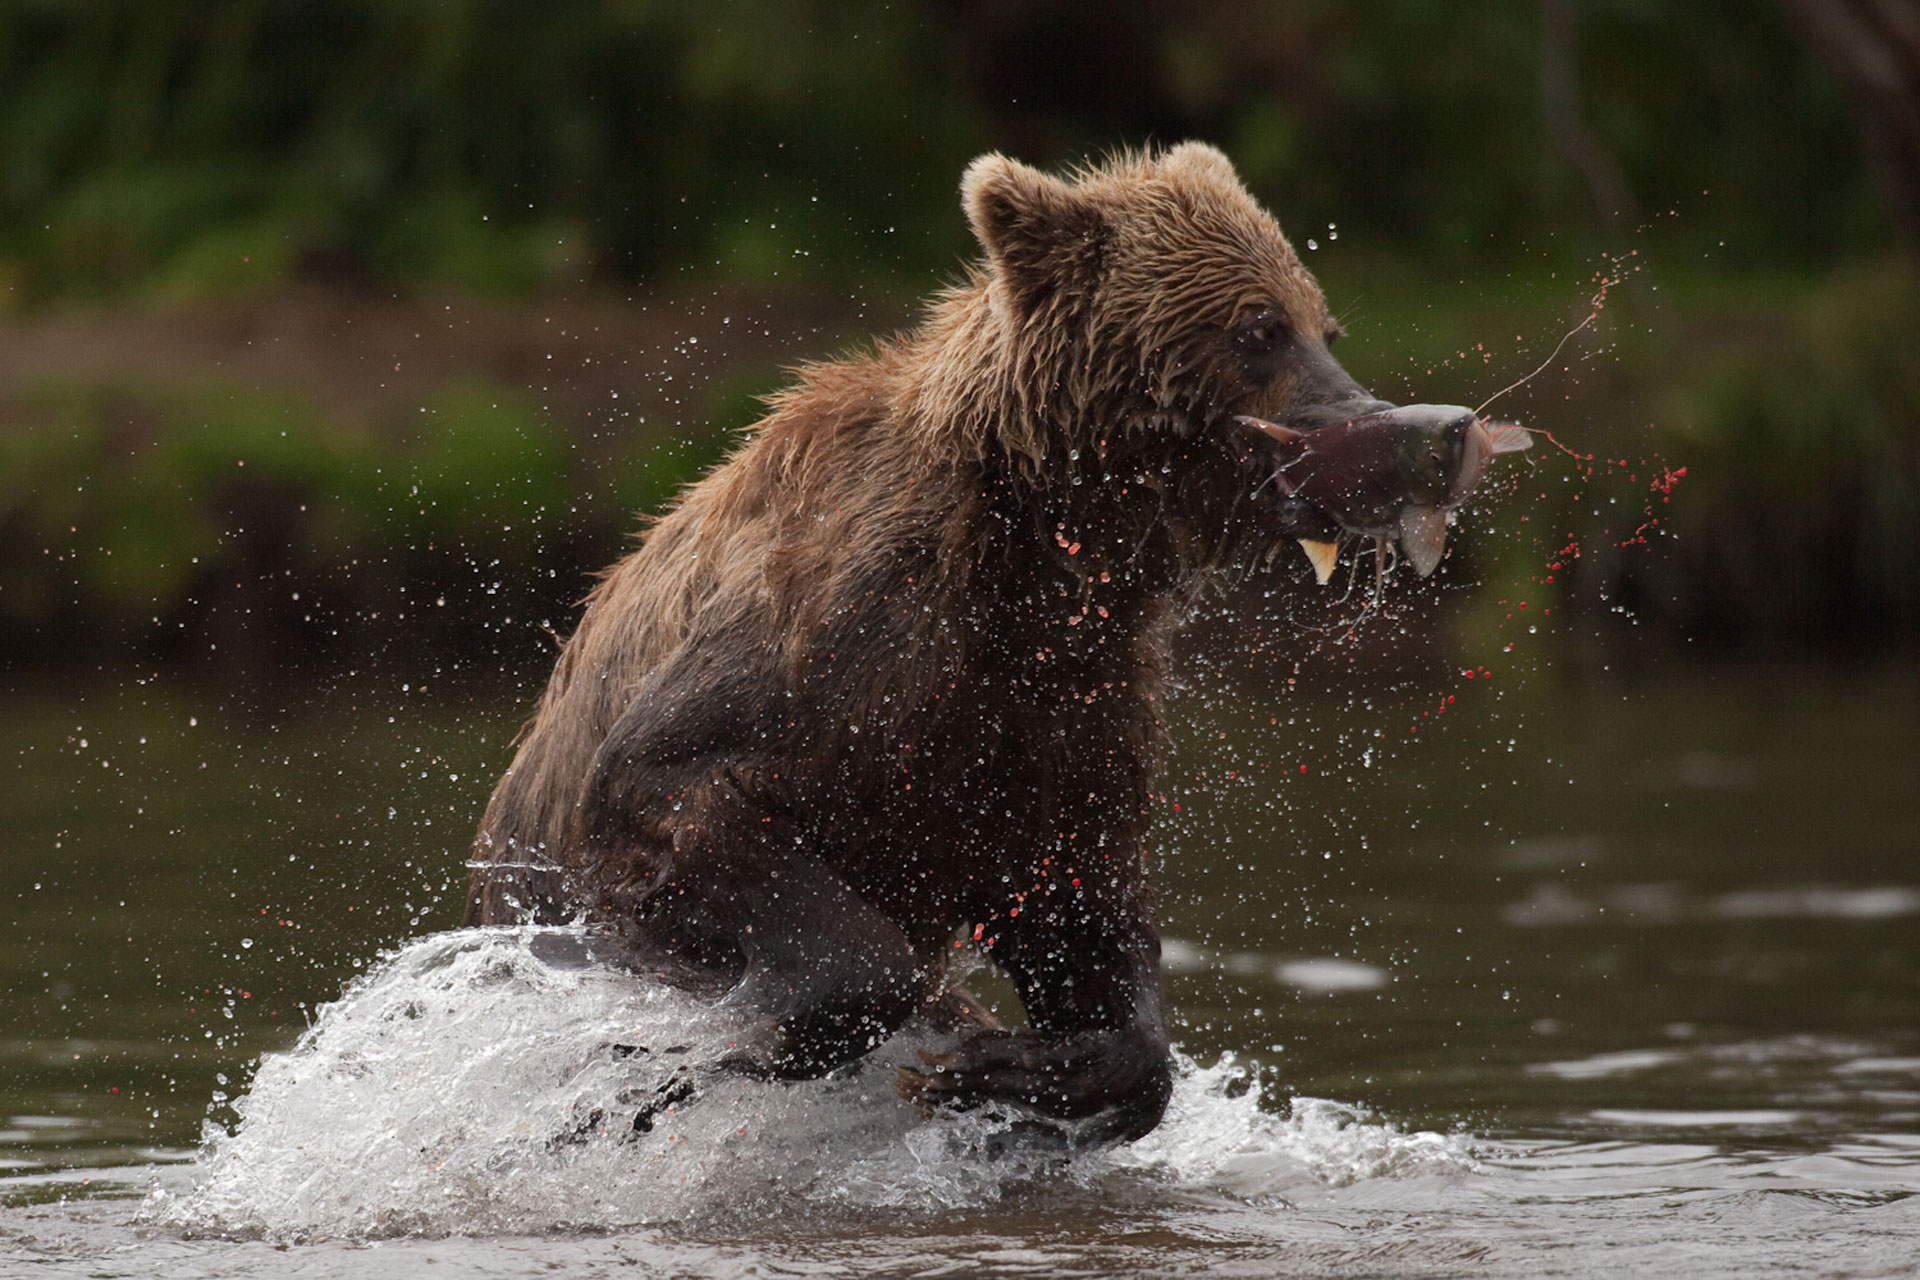 L'ours brun, un animal prioritaire